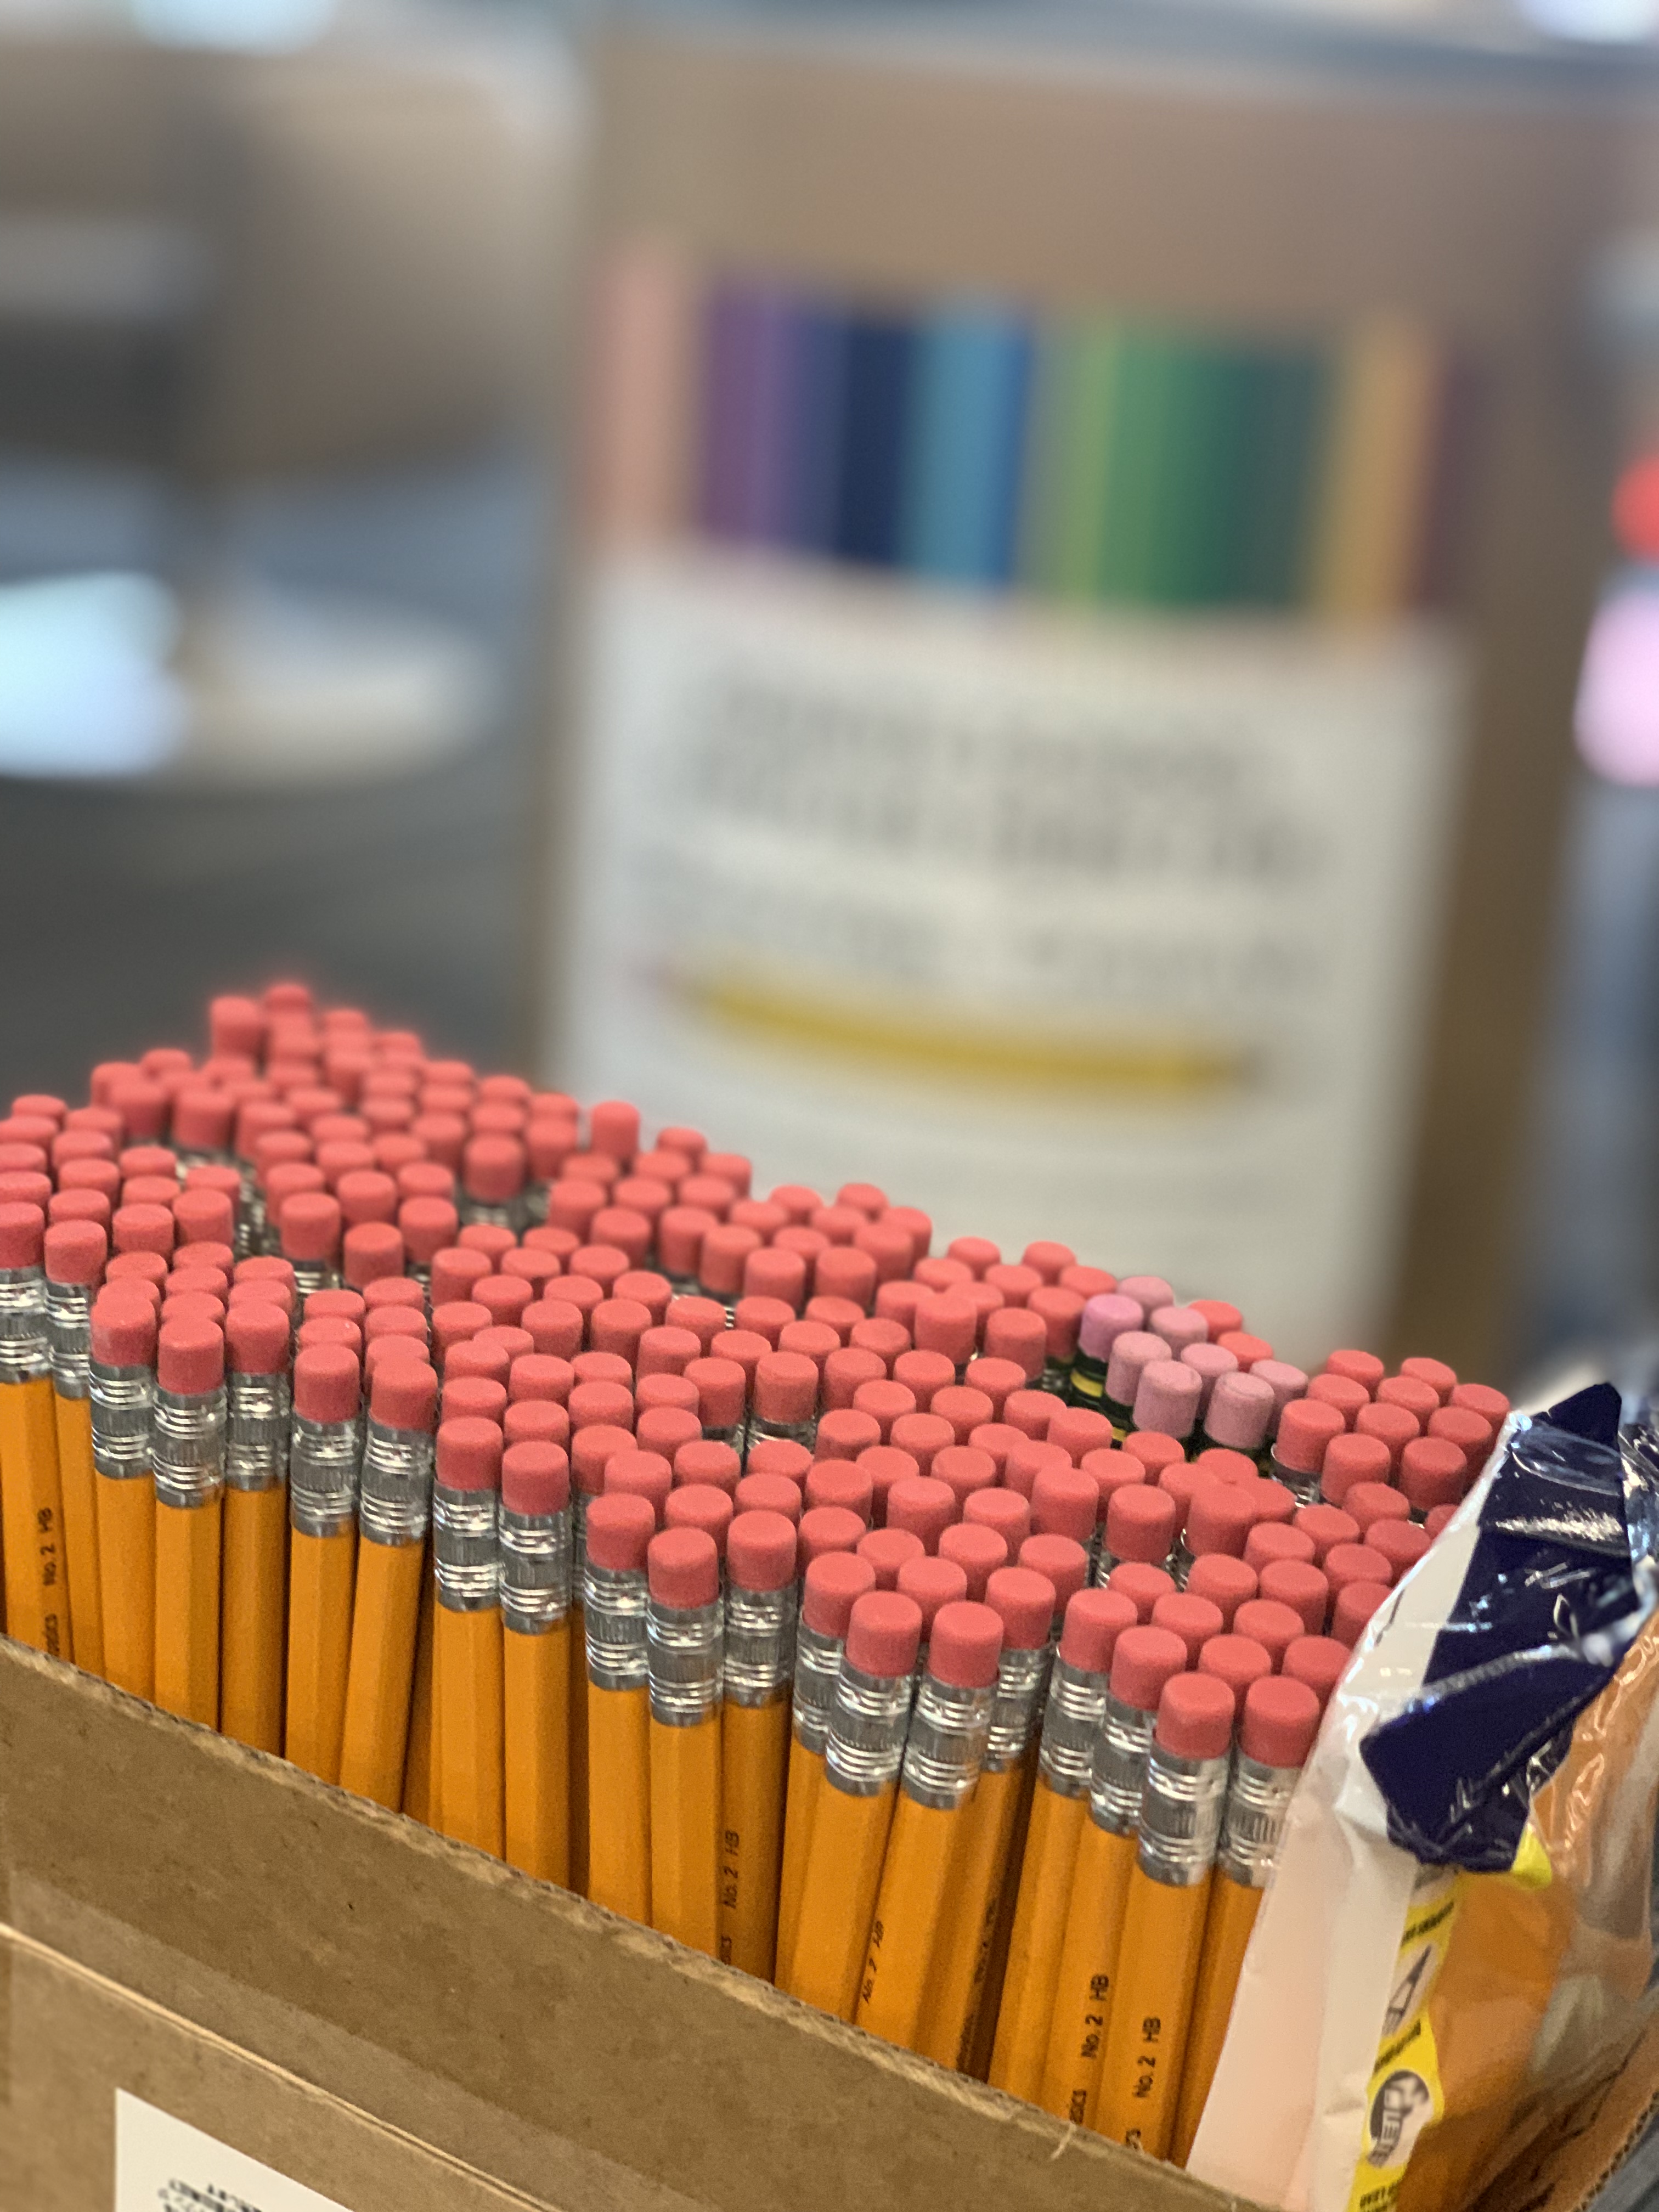 LOSO donated 9,812 Pencils